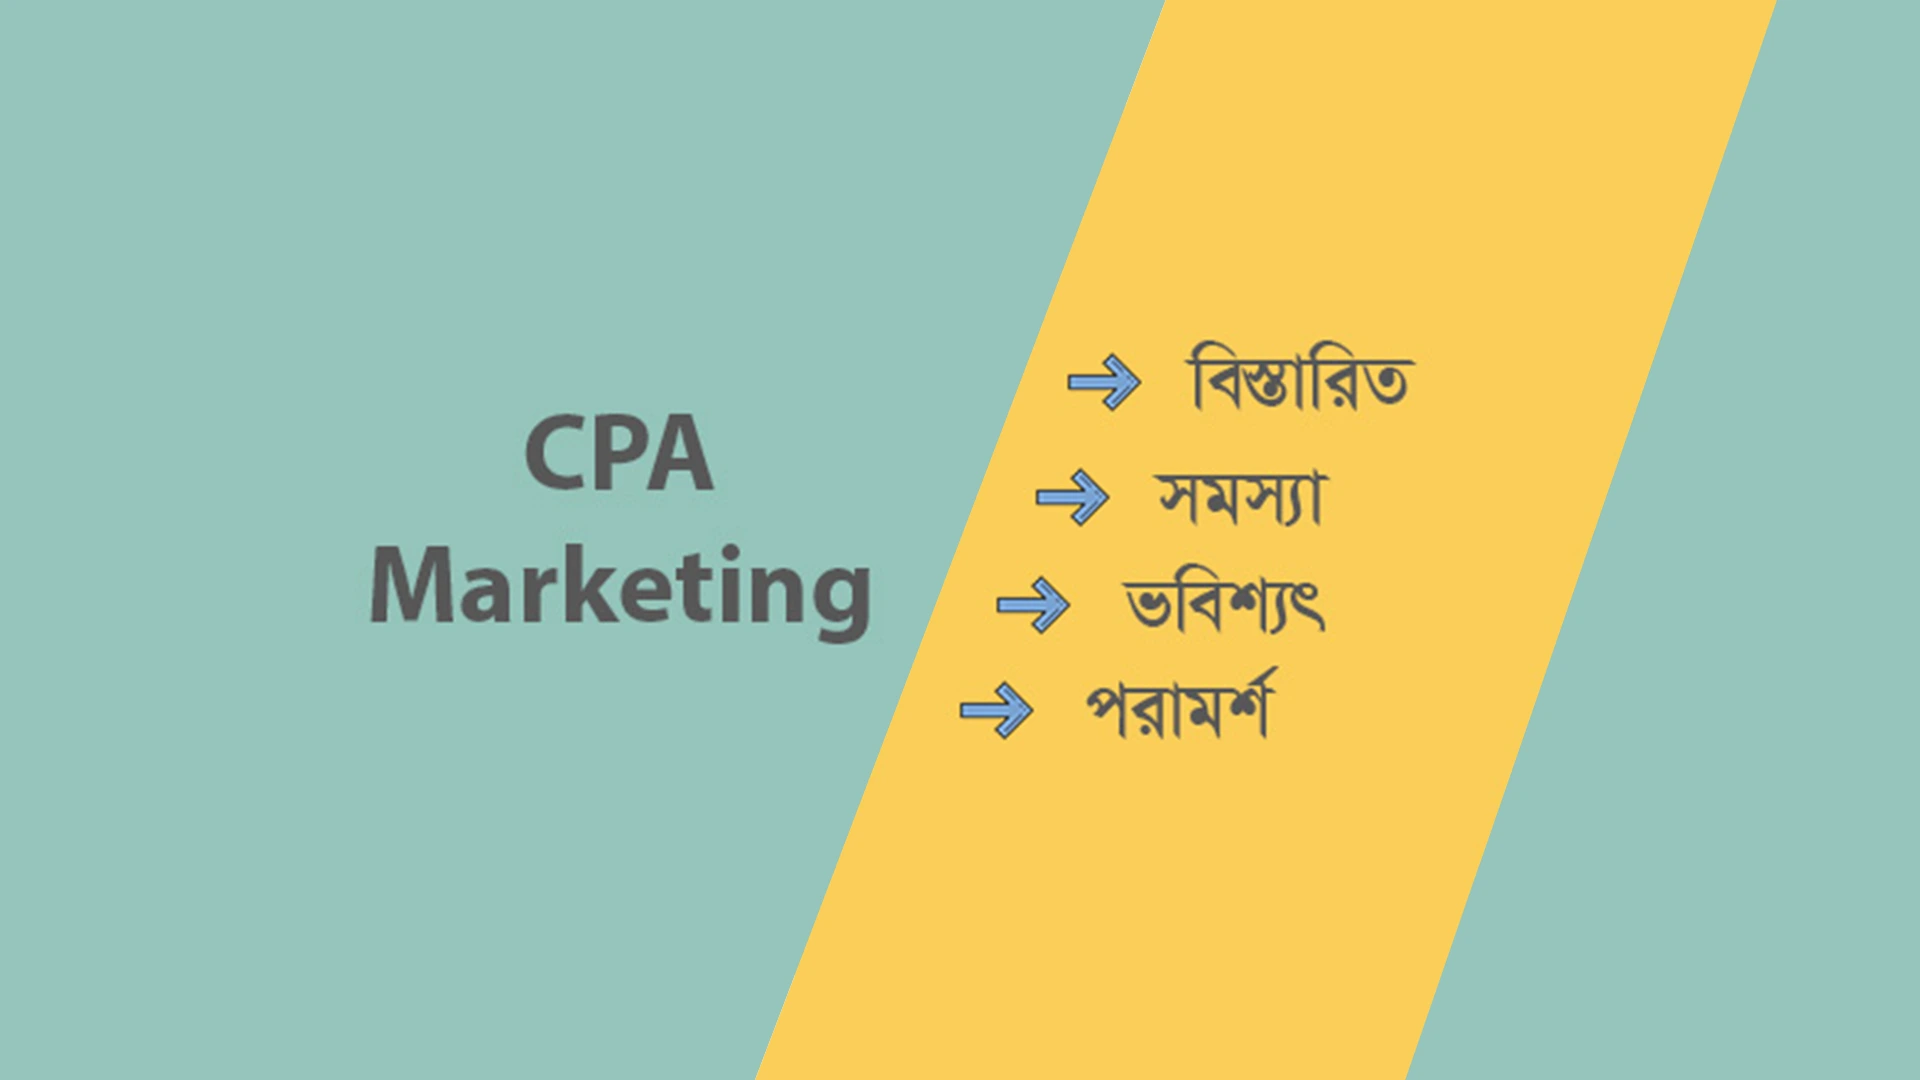 cpa marketing post feat img - saiful.com.bd